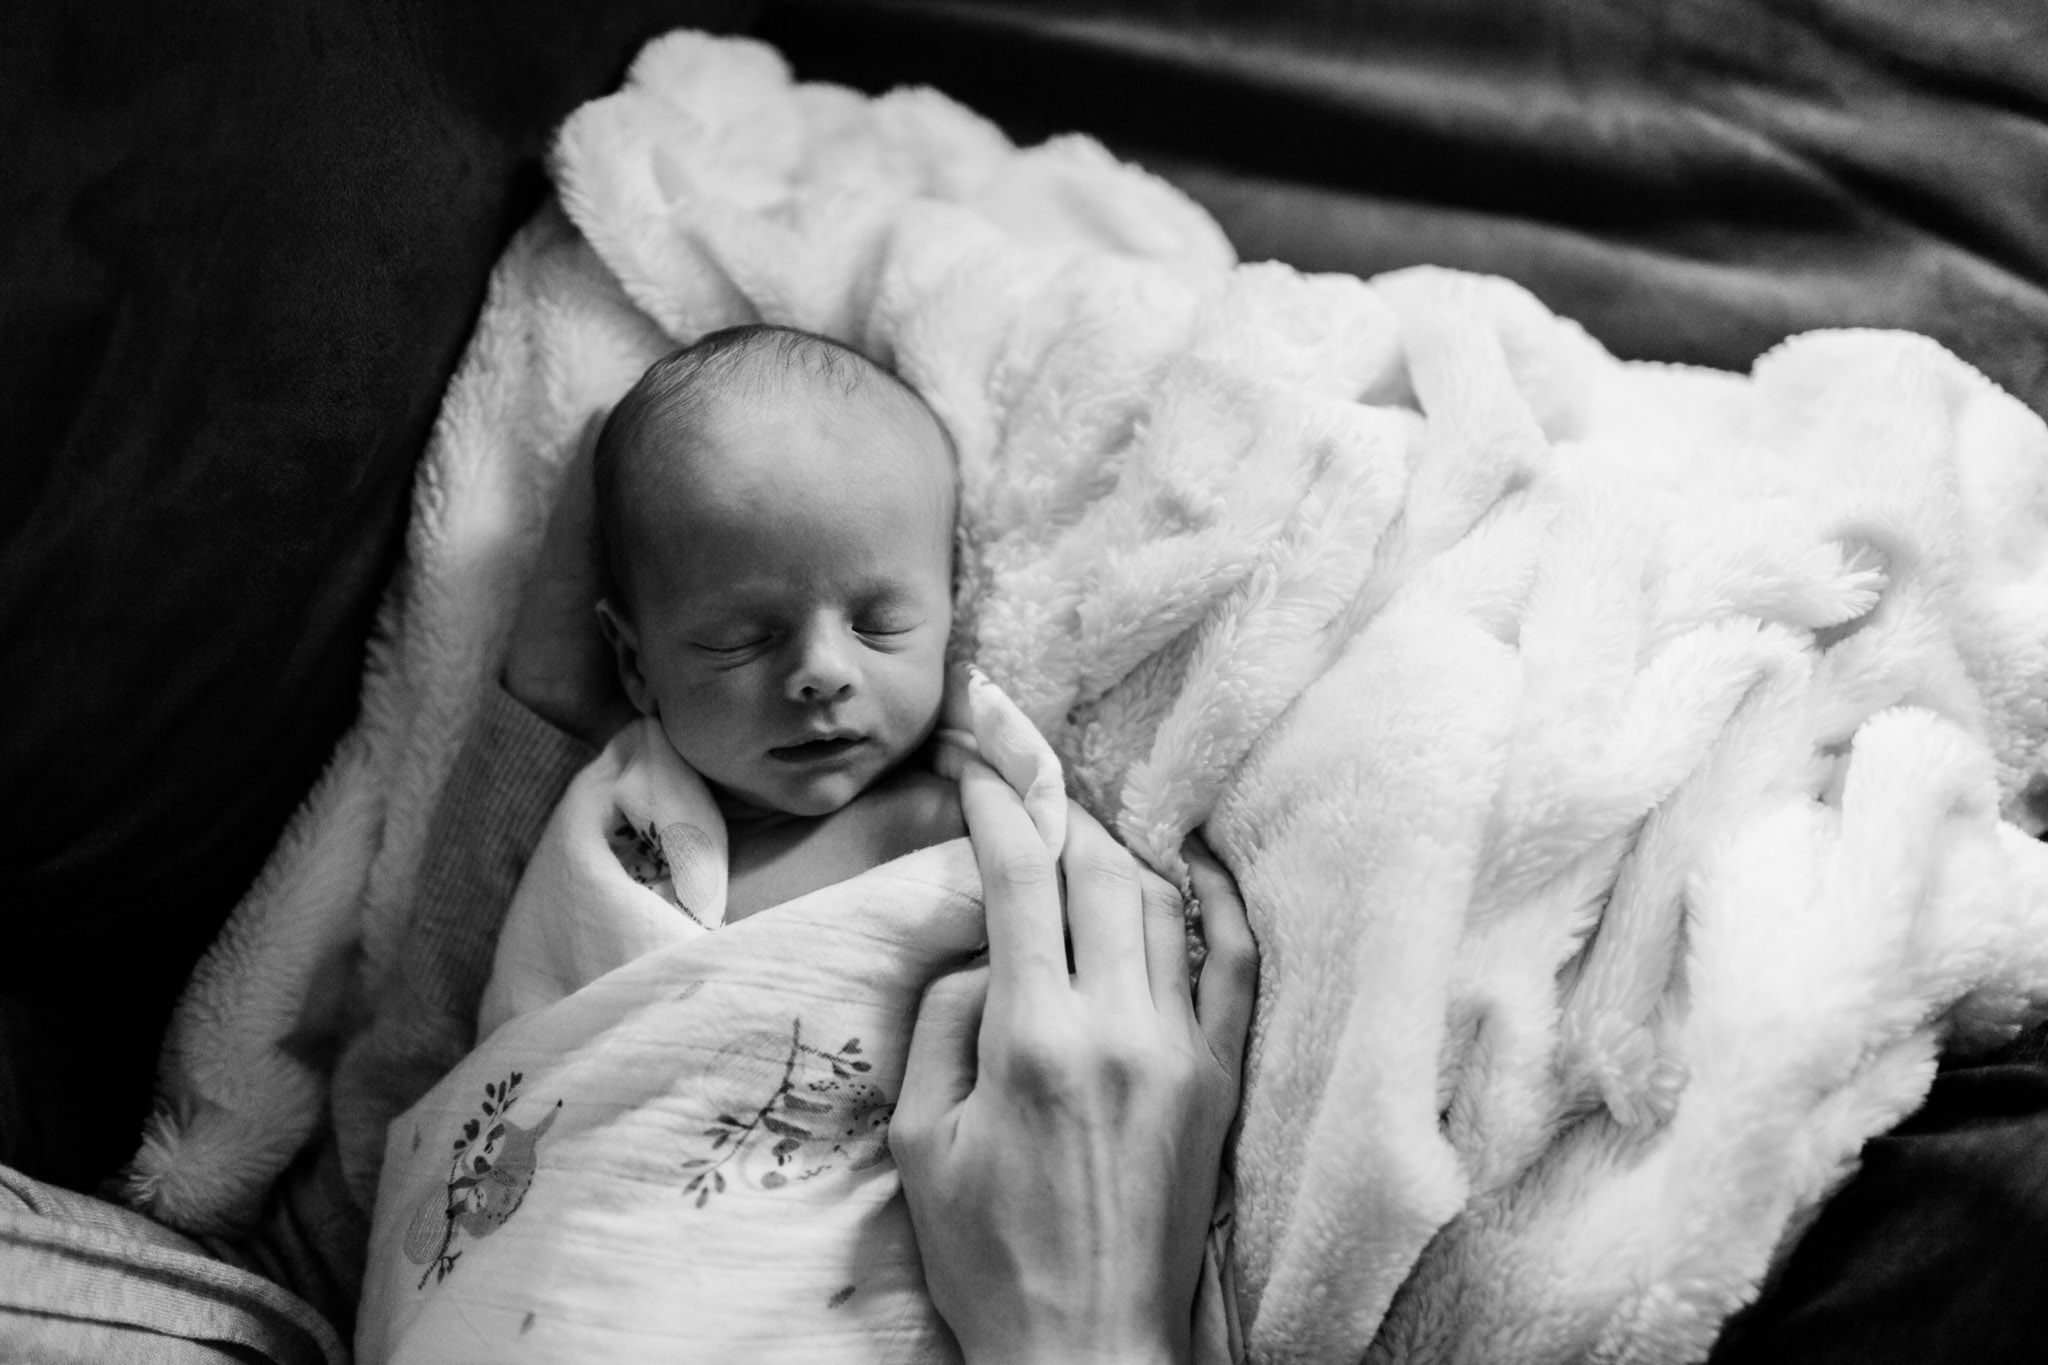 Durham Newborn Photographer | By G. Lin Photography | Organic lifestyle newborn photography of baby swaddled